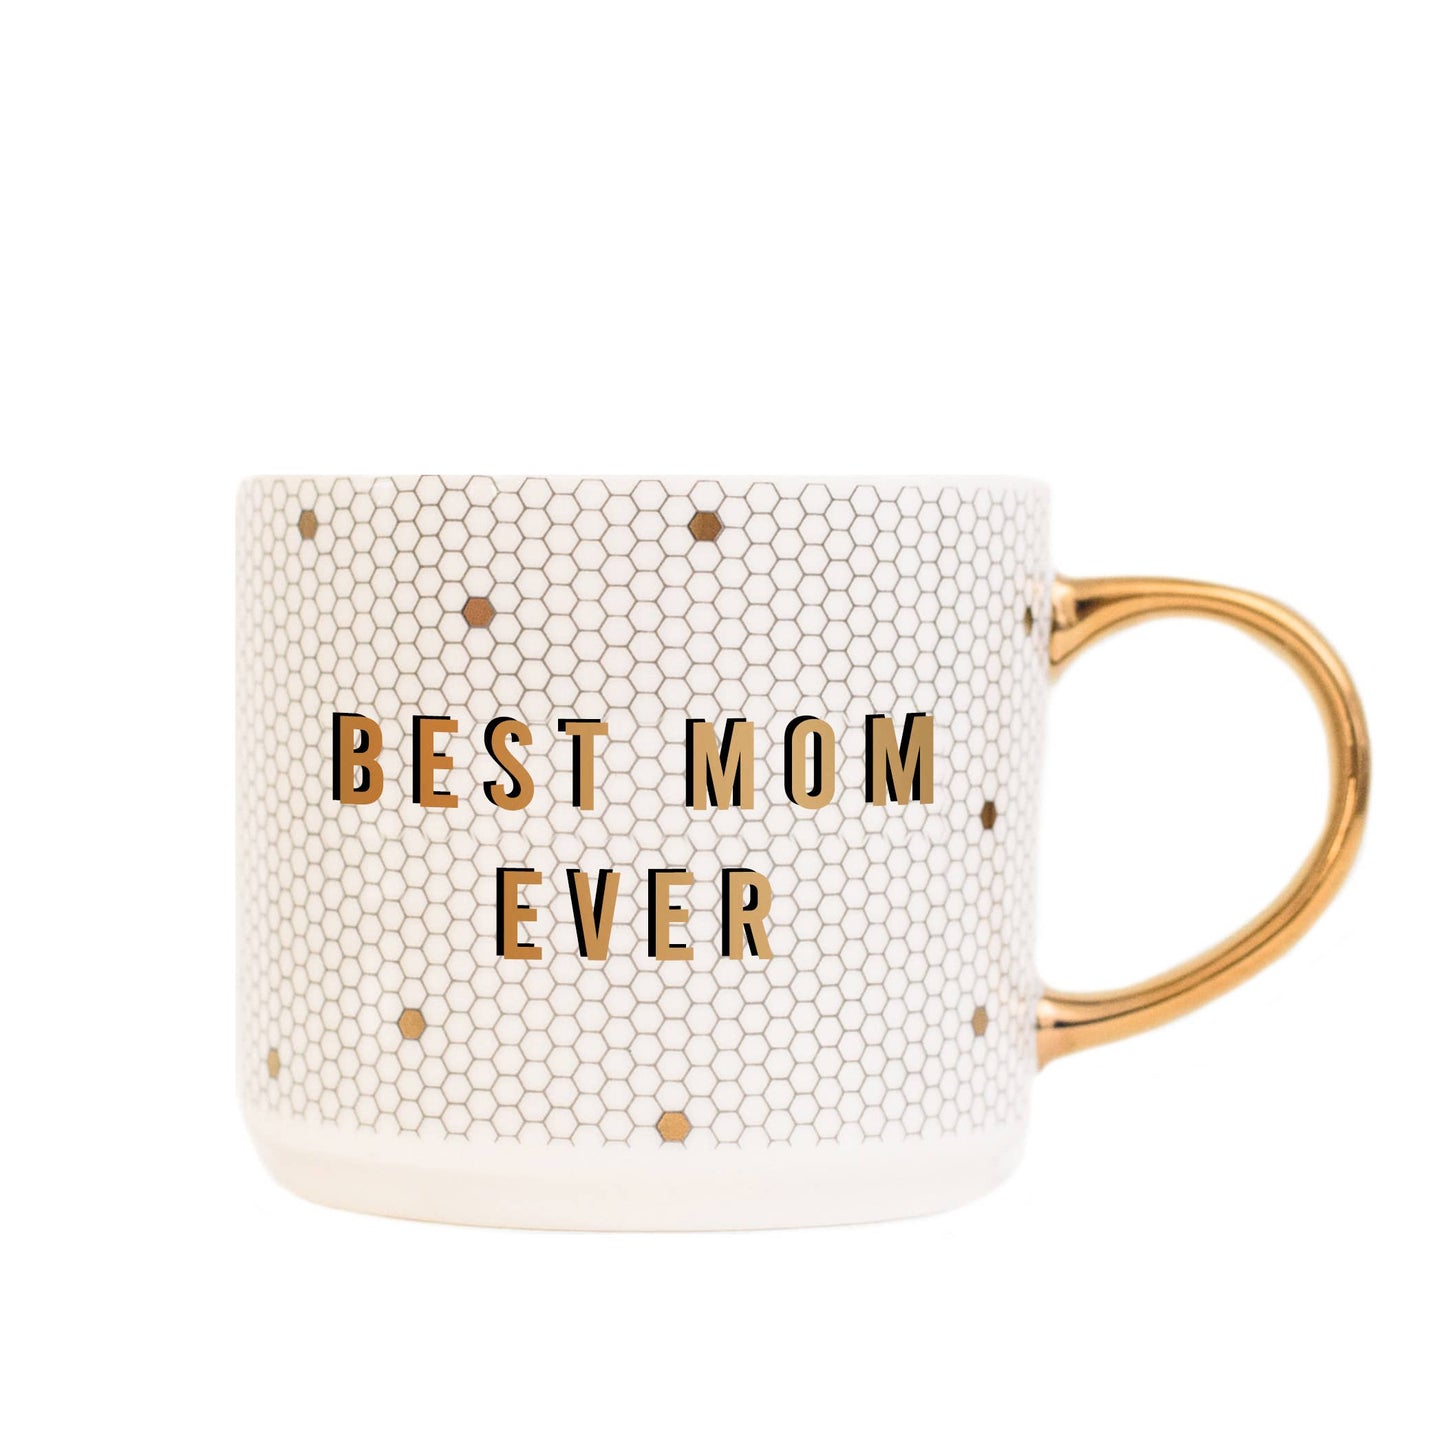 Best Mom Ever - Gold, White Honeycomb Tile Coffee Mug- 17 oz